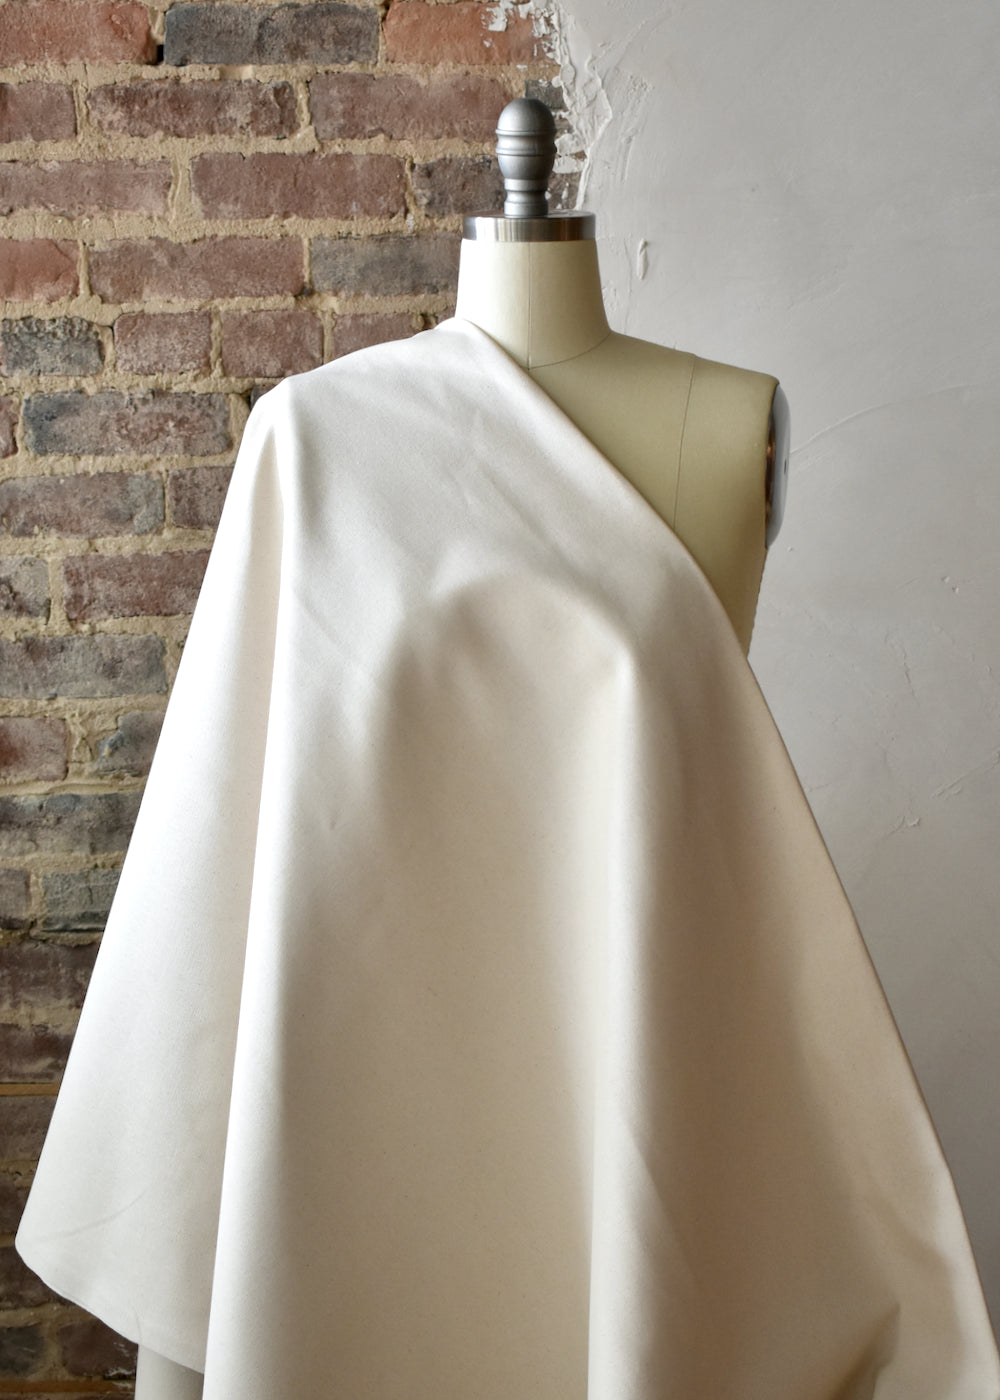 Cotton Canvas Fabric / Duck Cloth - Natural - 10oz / 58